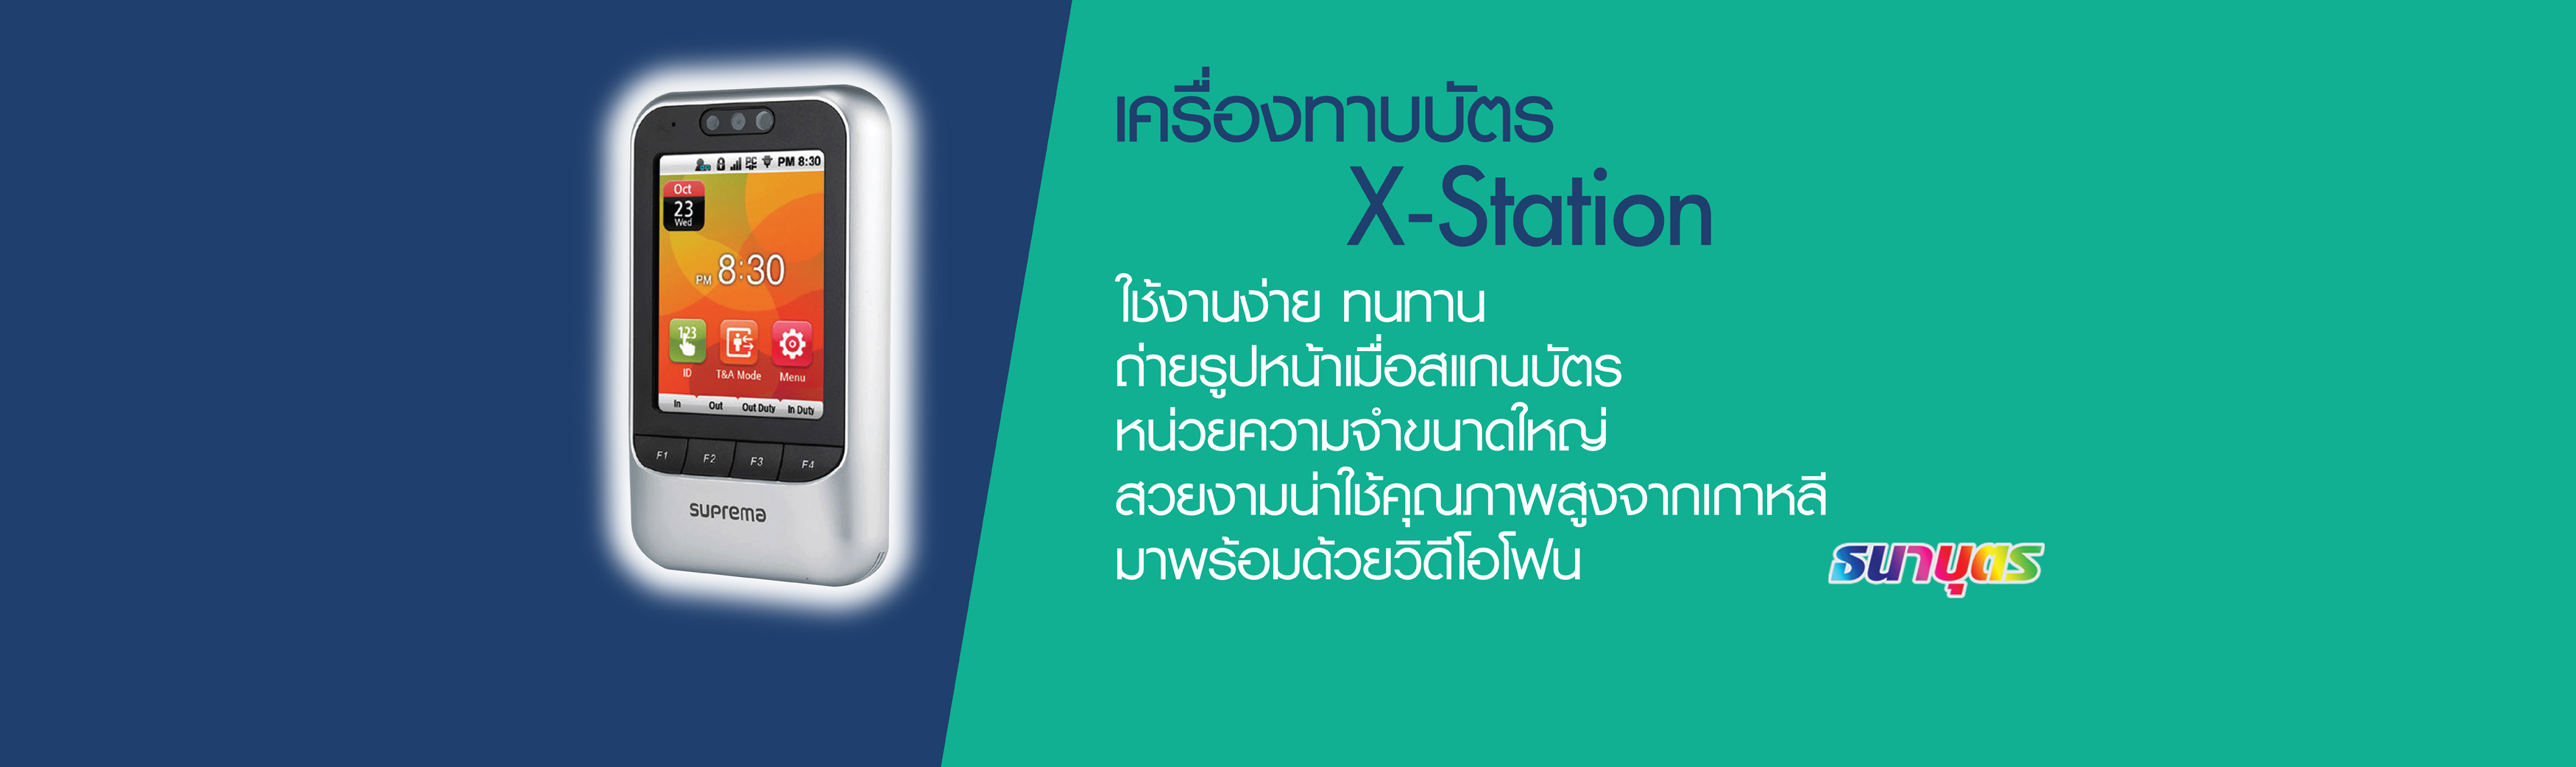 X-Station